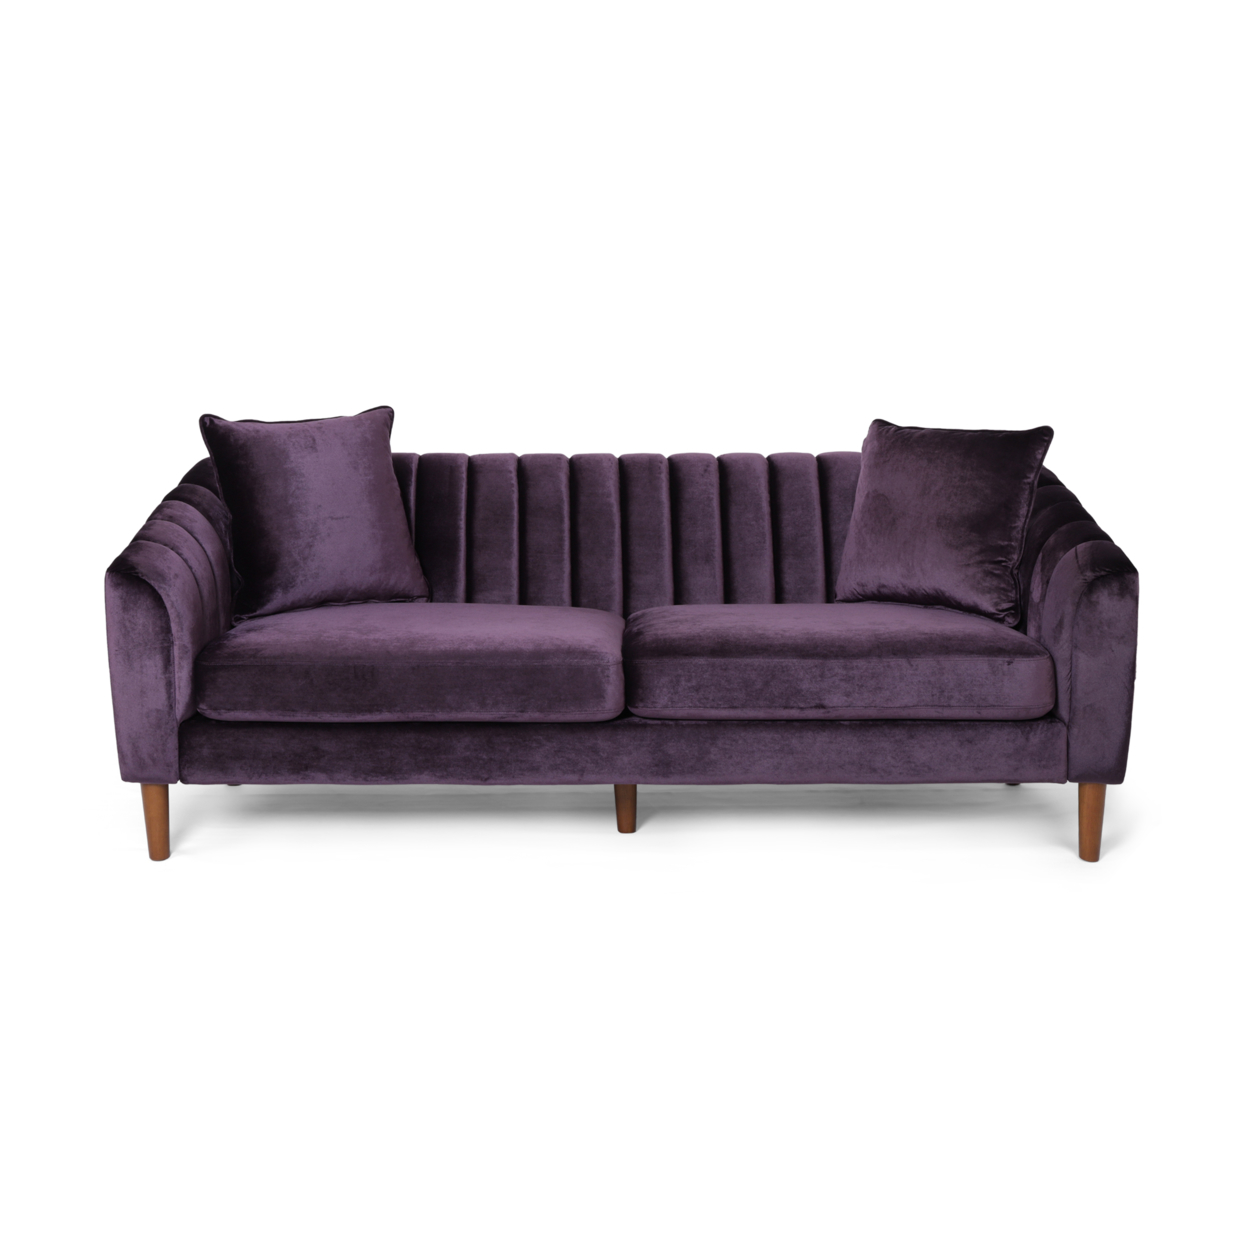 Susan Contemporary Velvet 3 Seater Sofa - Teal + Dark Brown